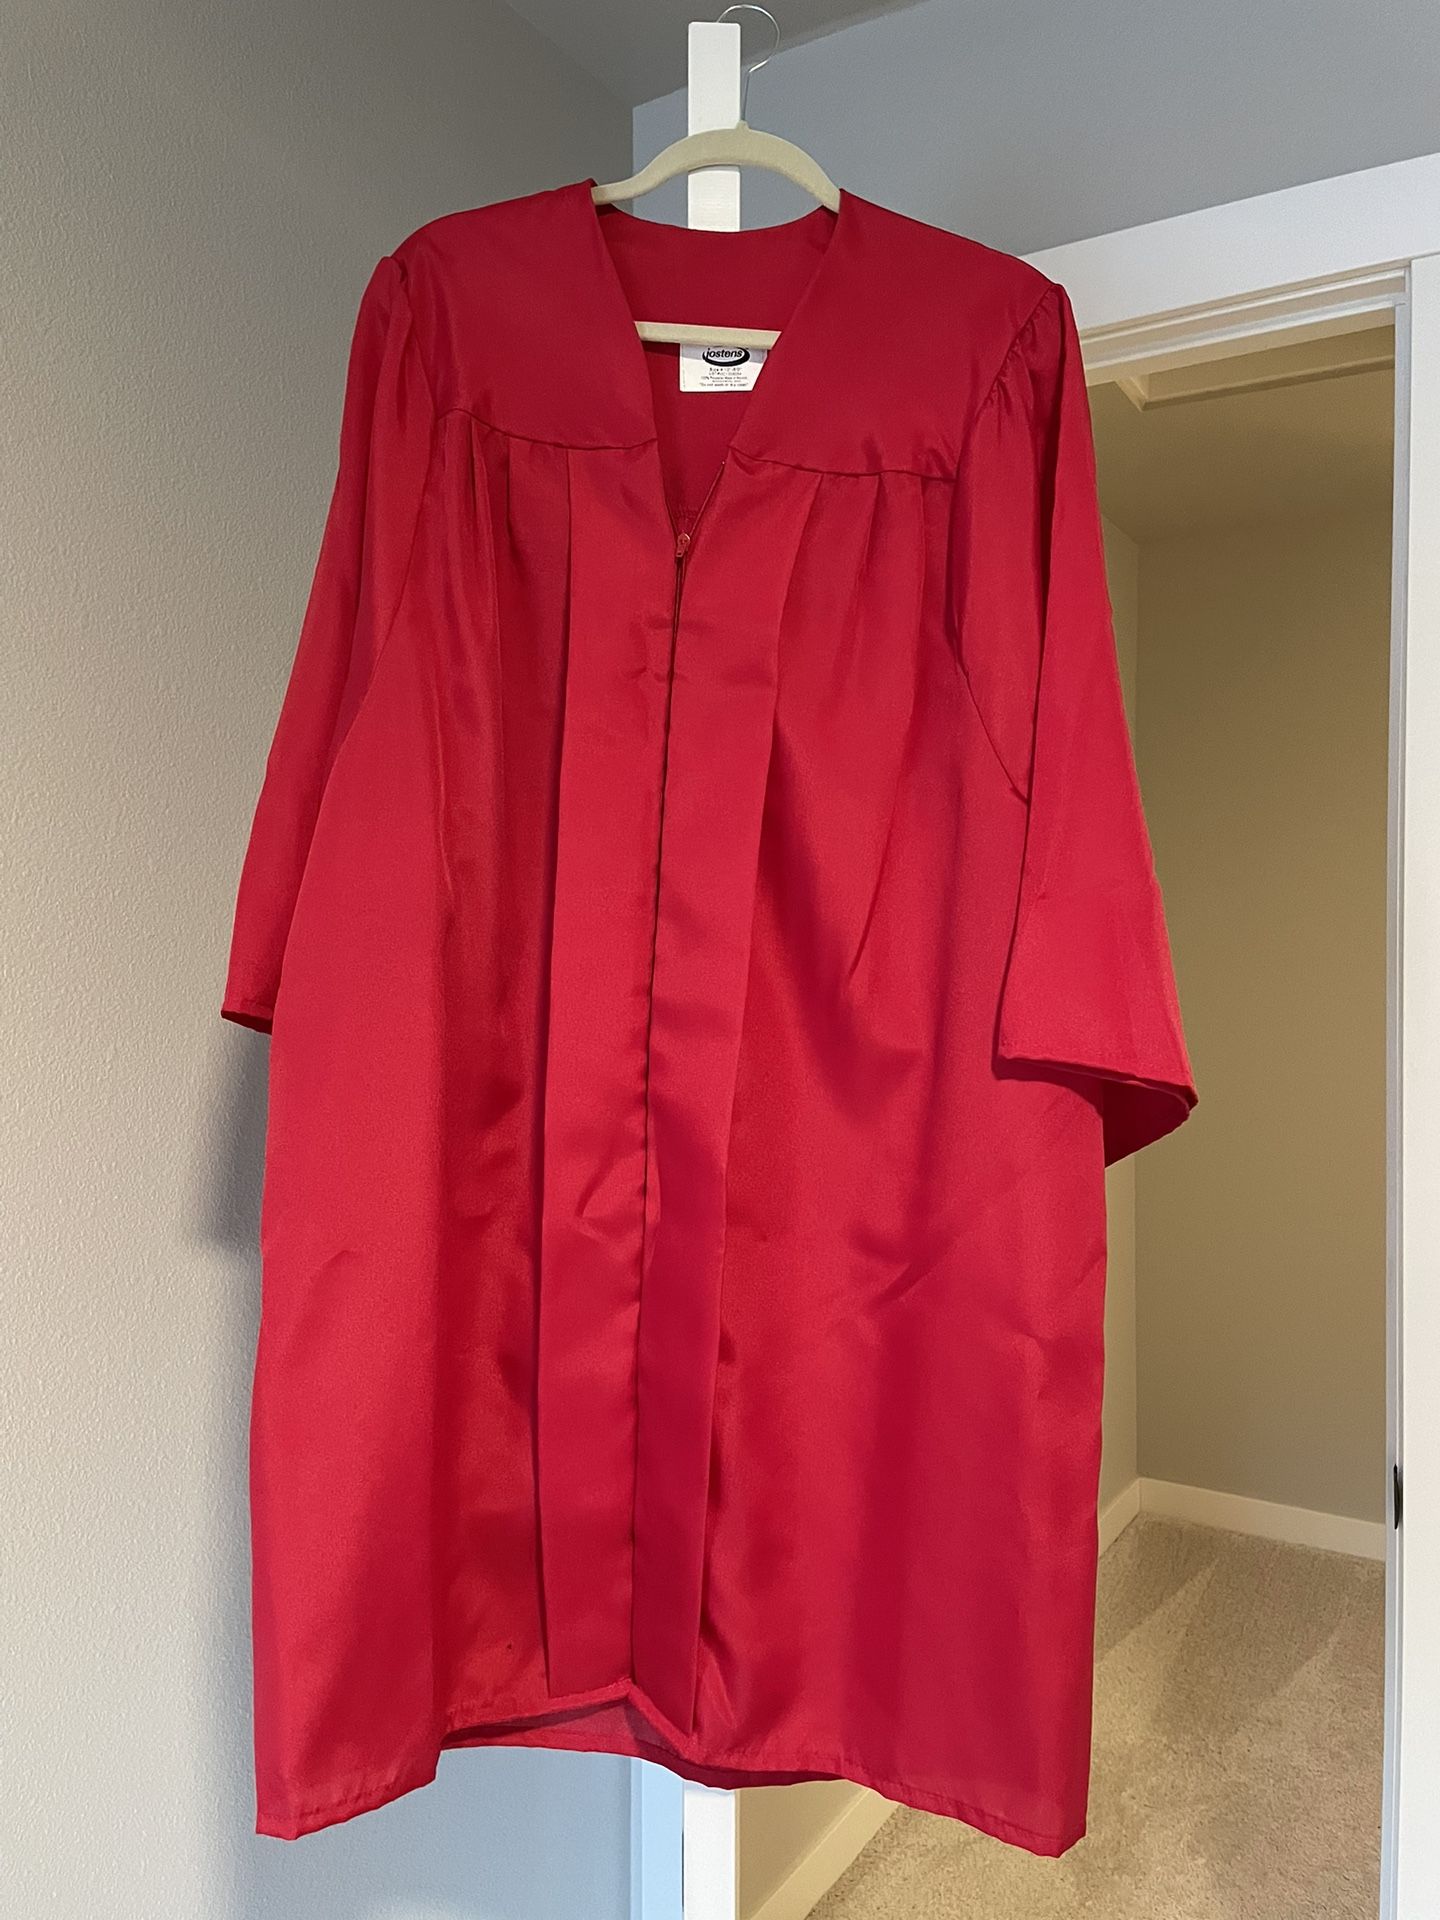 Red Jostens Graduation Gown